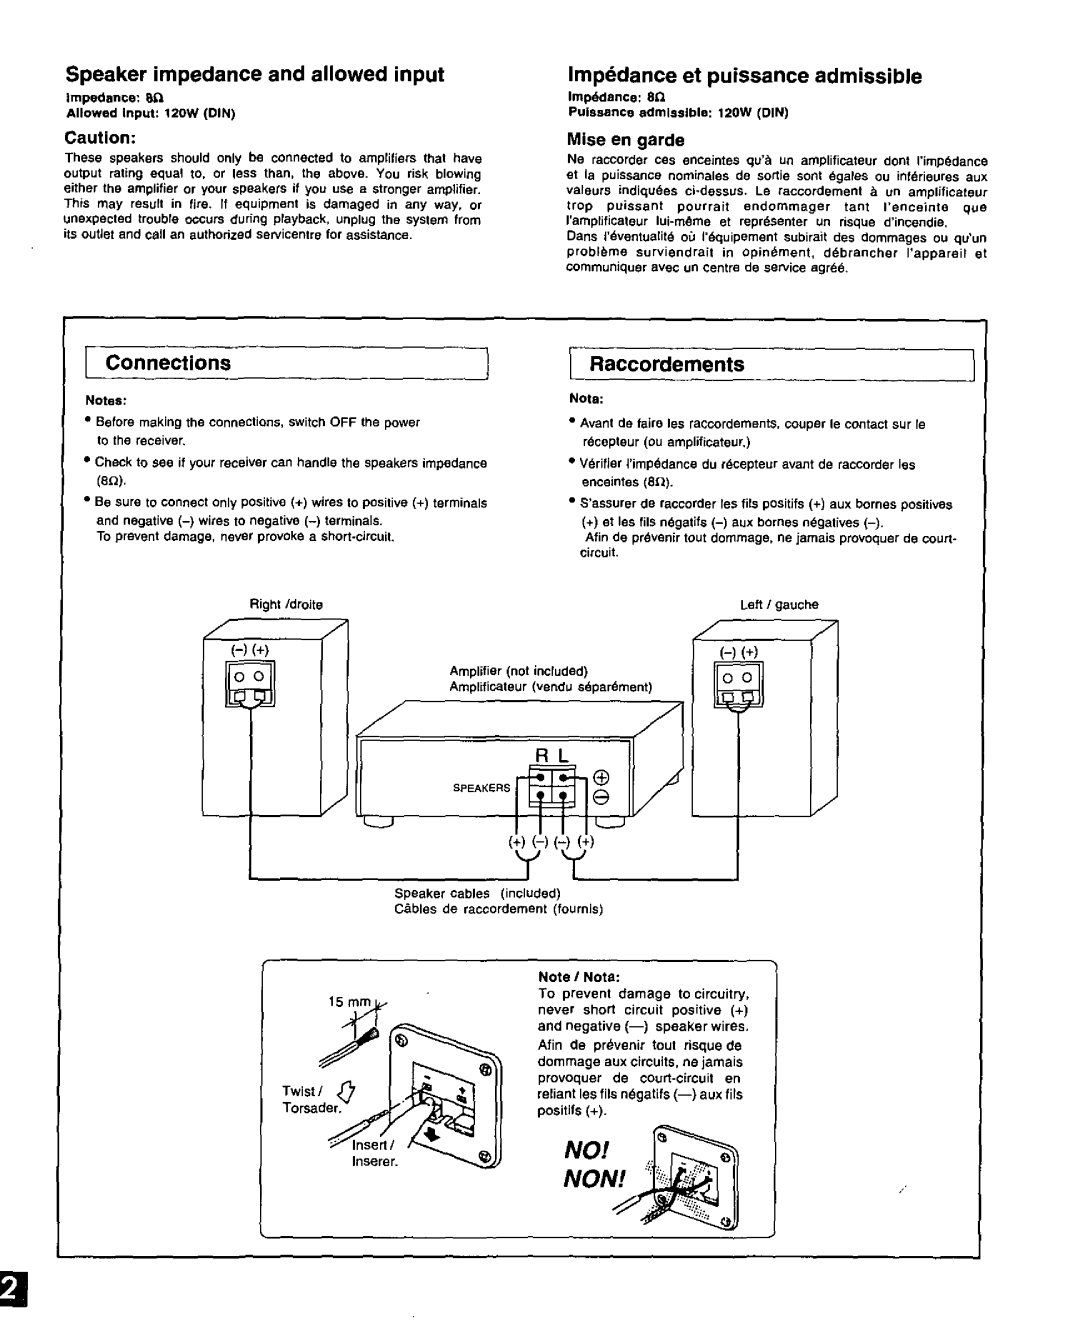 Panasonic SB-A286 manual 